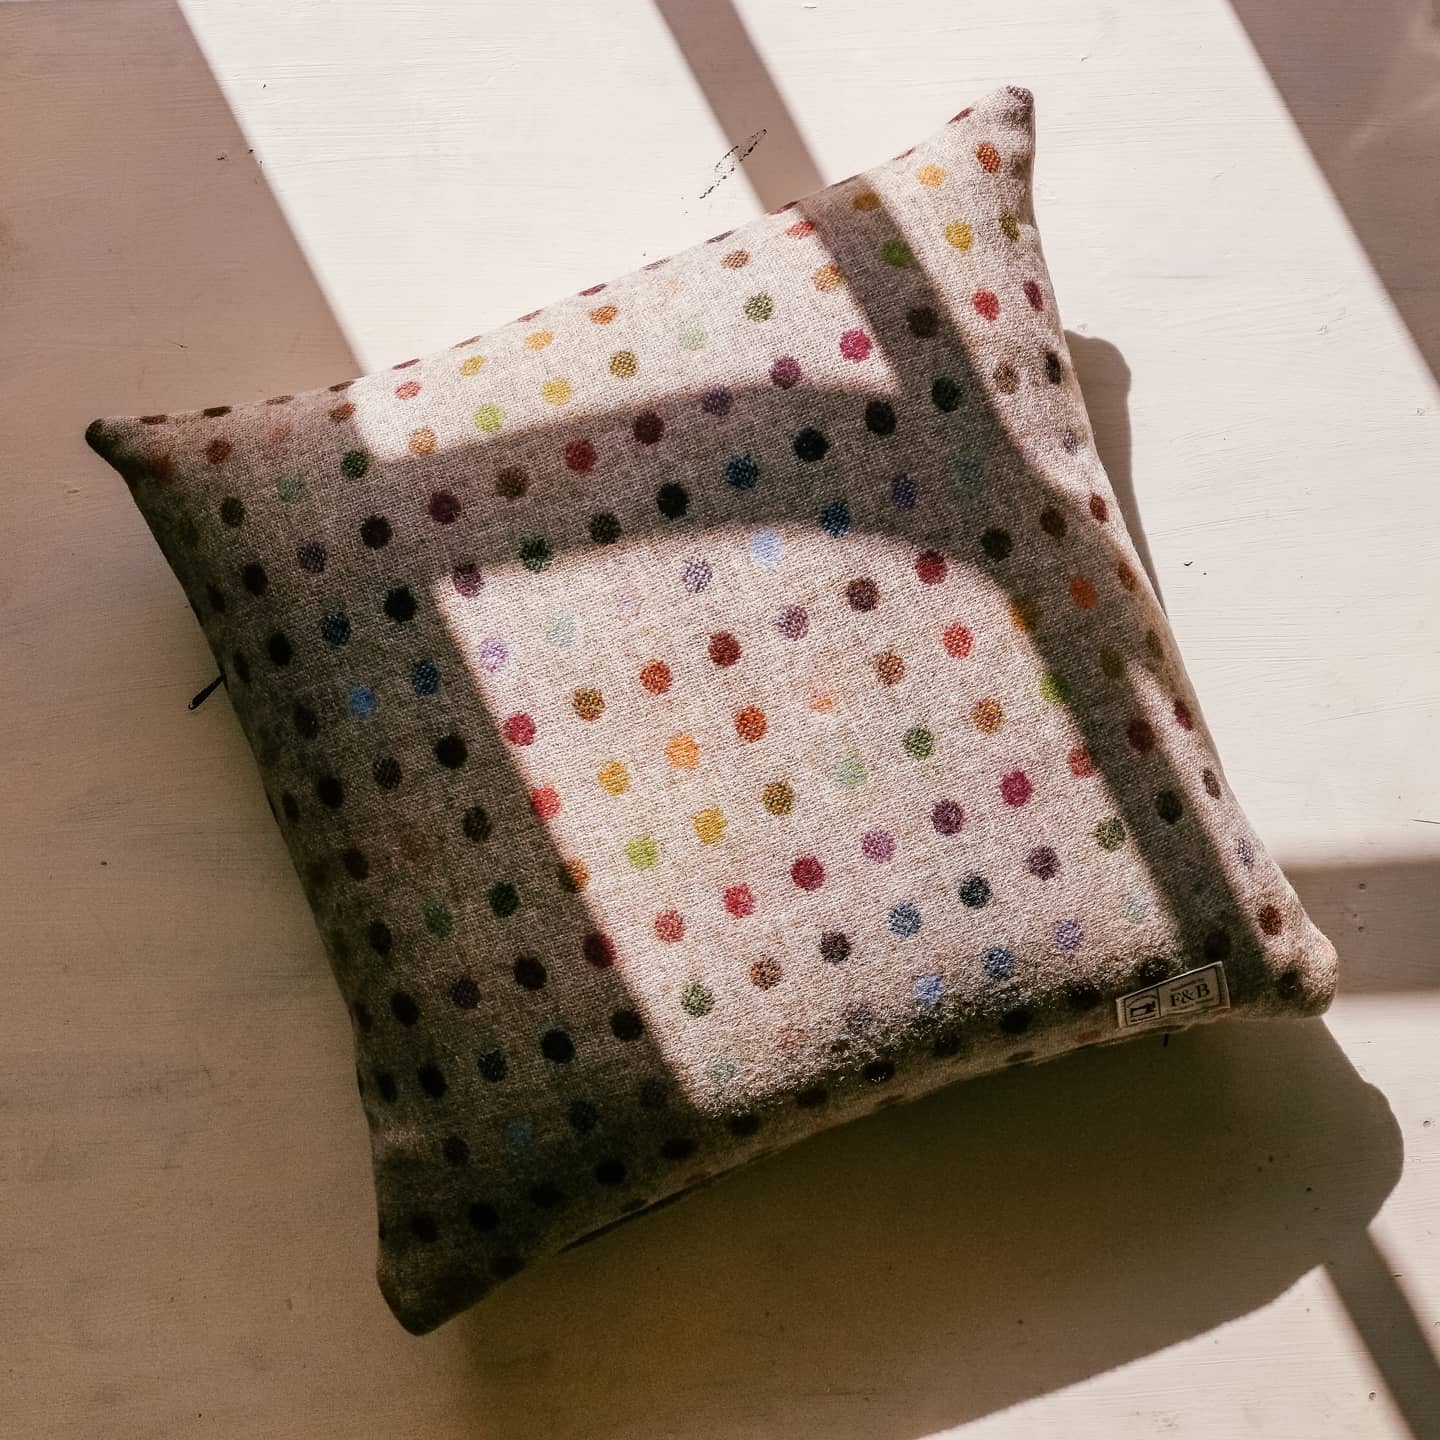 Multispot Cushion - Abraham Moon - F&B Crafts - F&B Handmade